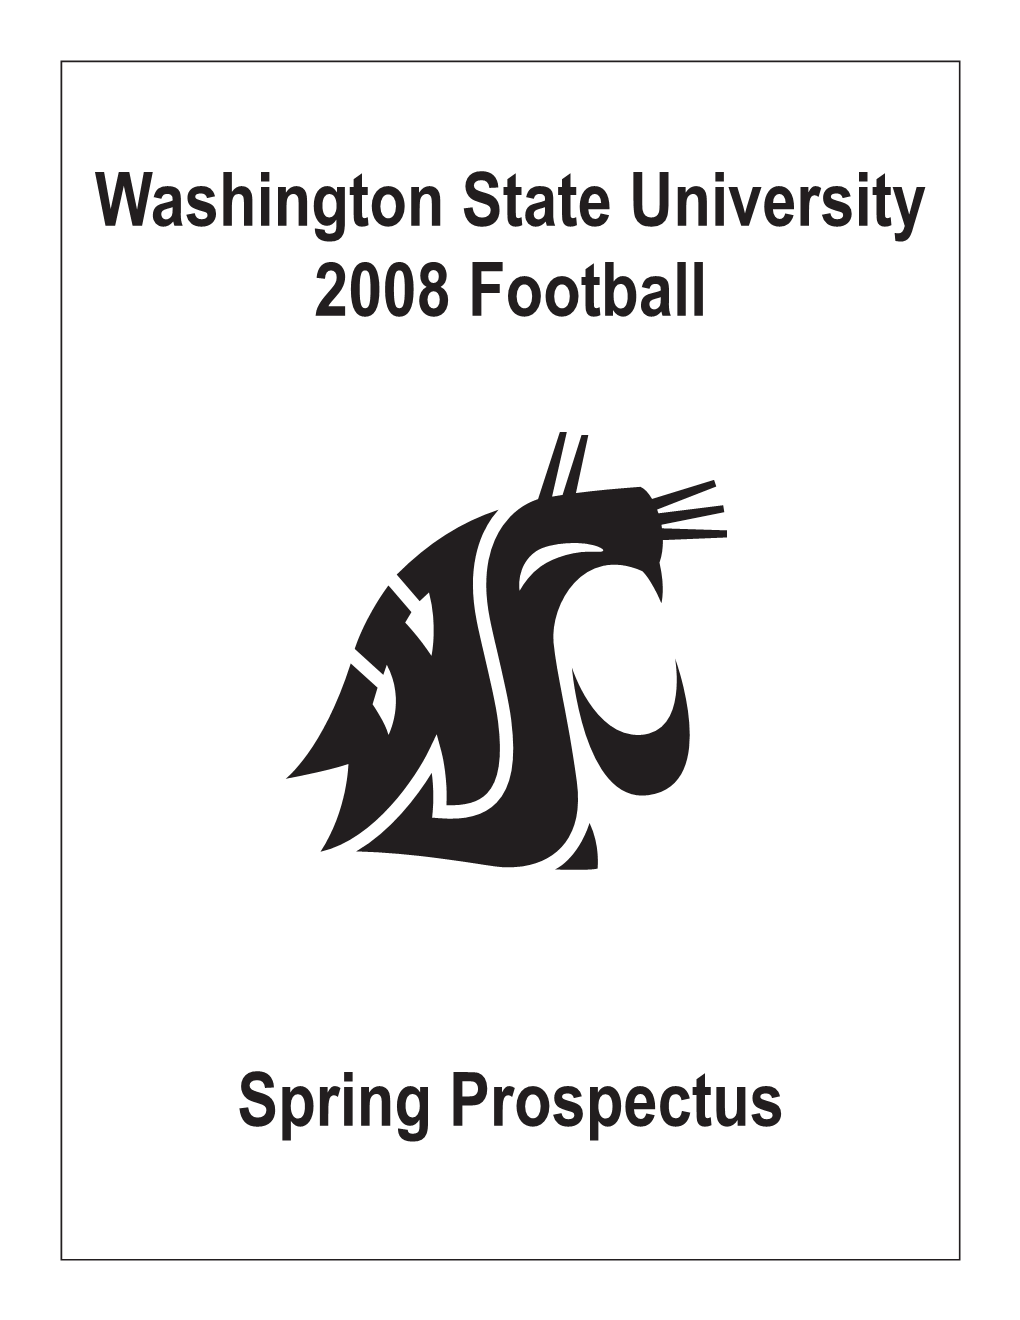 Washington State University 2008 Football Spring Prospectus